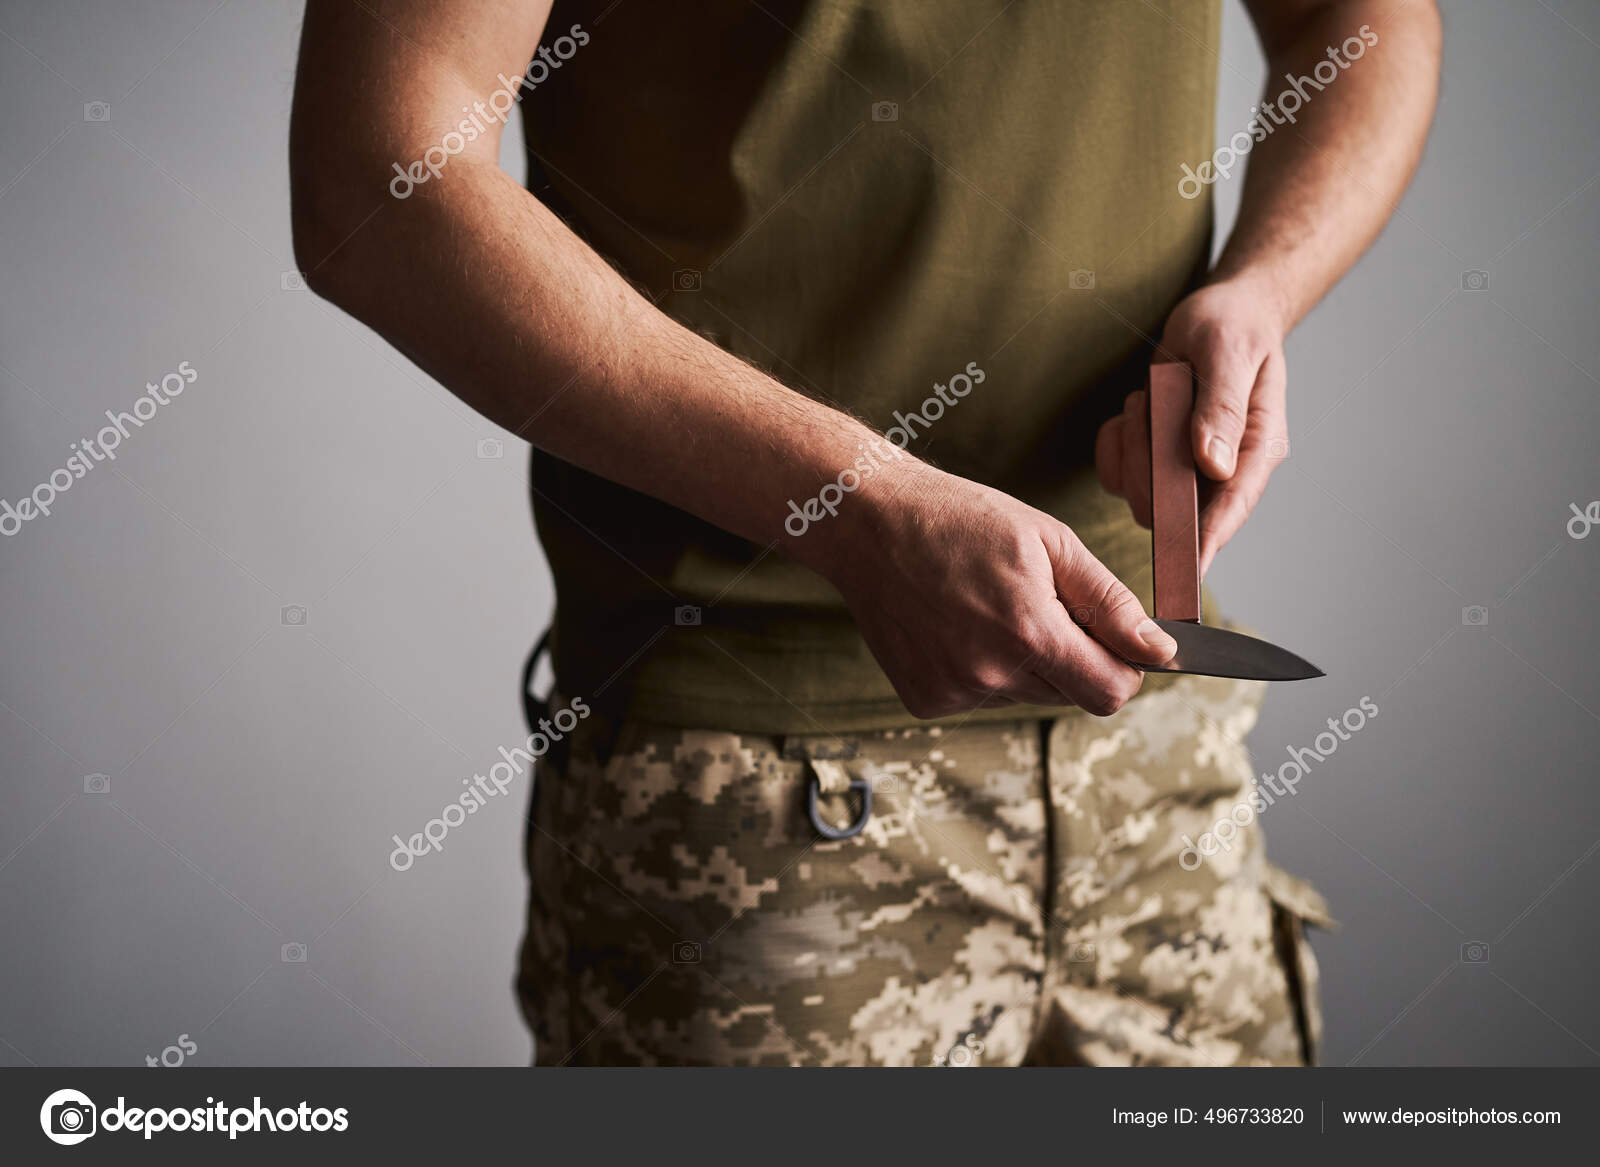 The Man Using Whetstone To Sharpening His Pocket Knife. Pocket